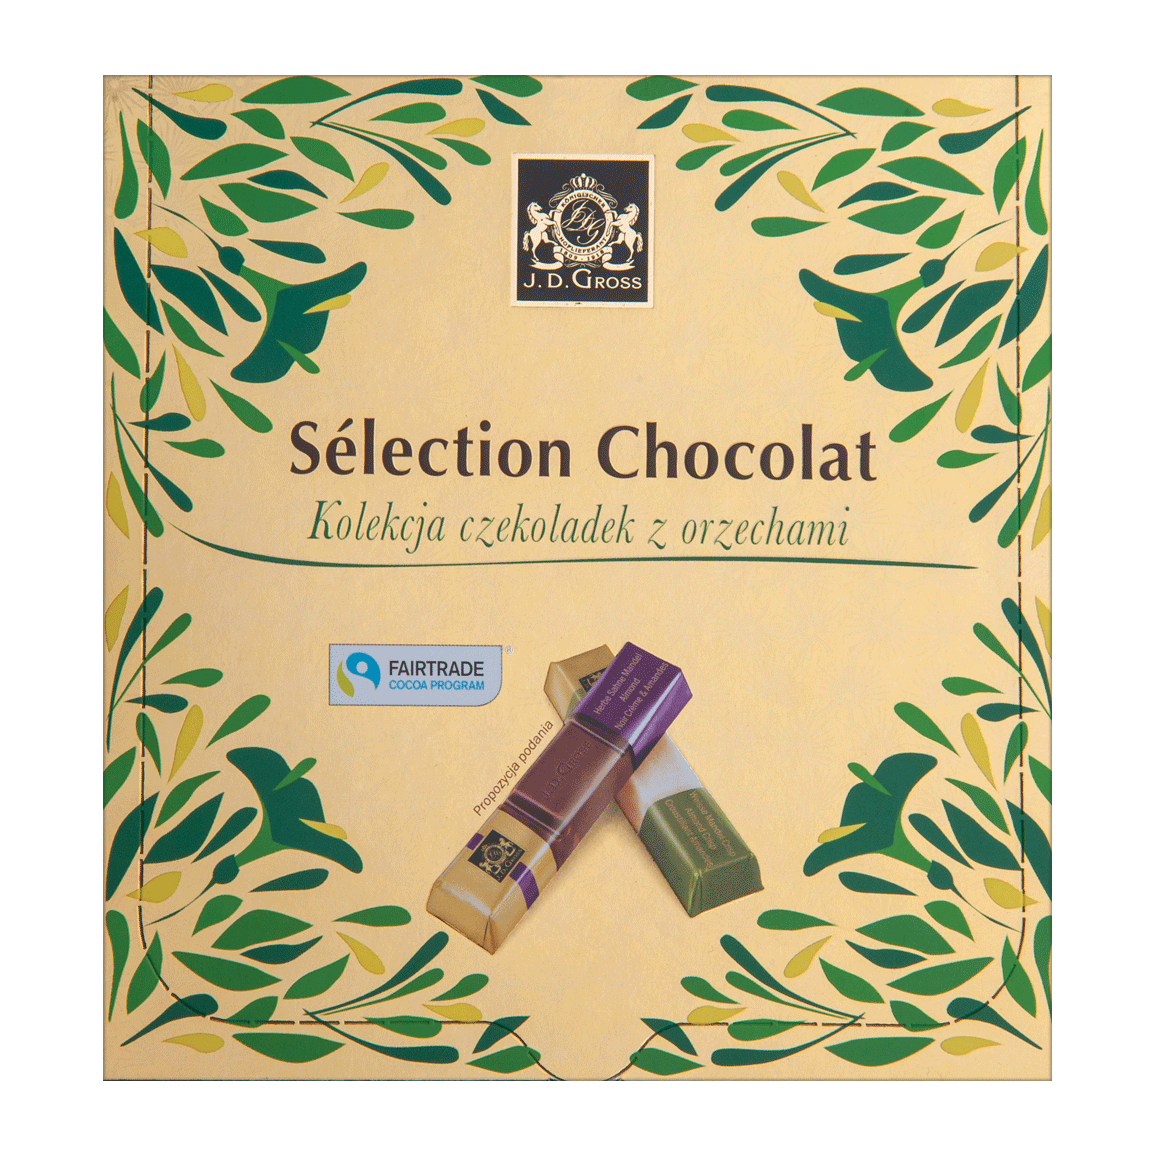 J.D. Gross Kolekcja czekoladek z orzechami